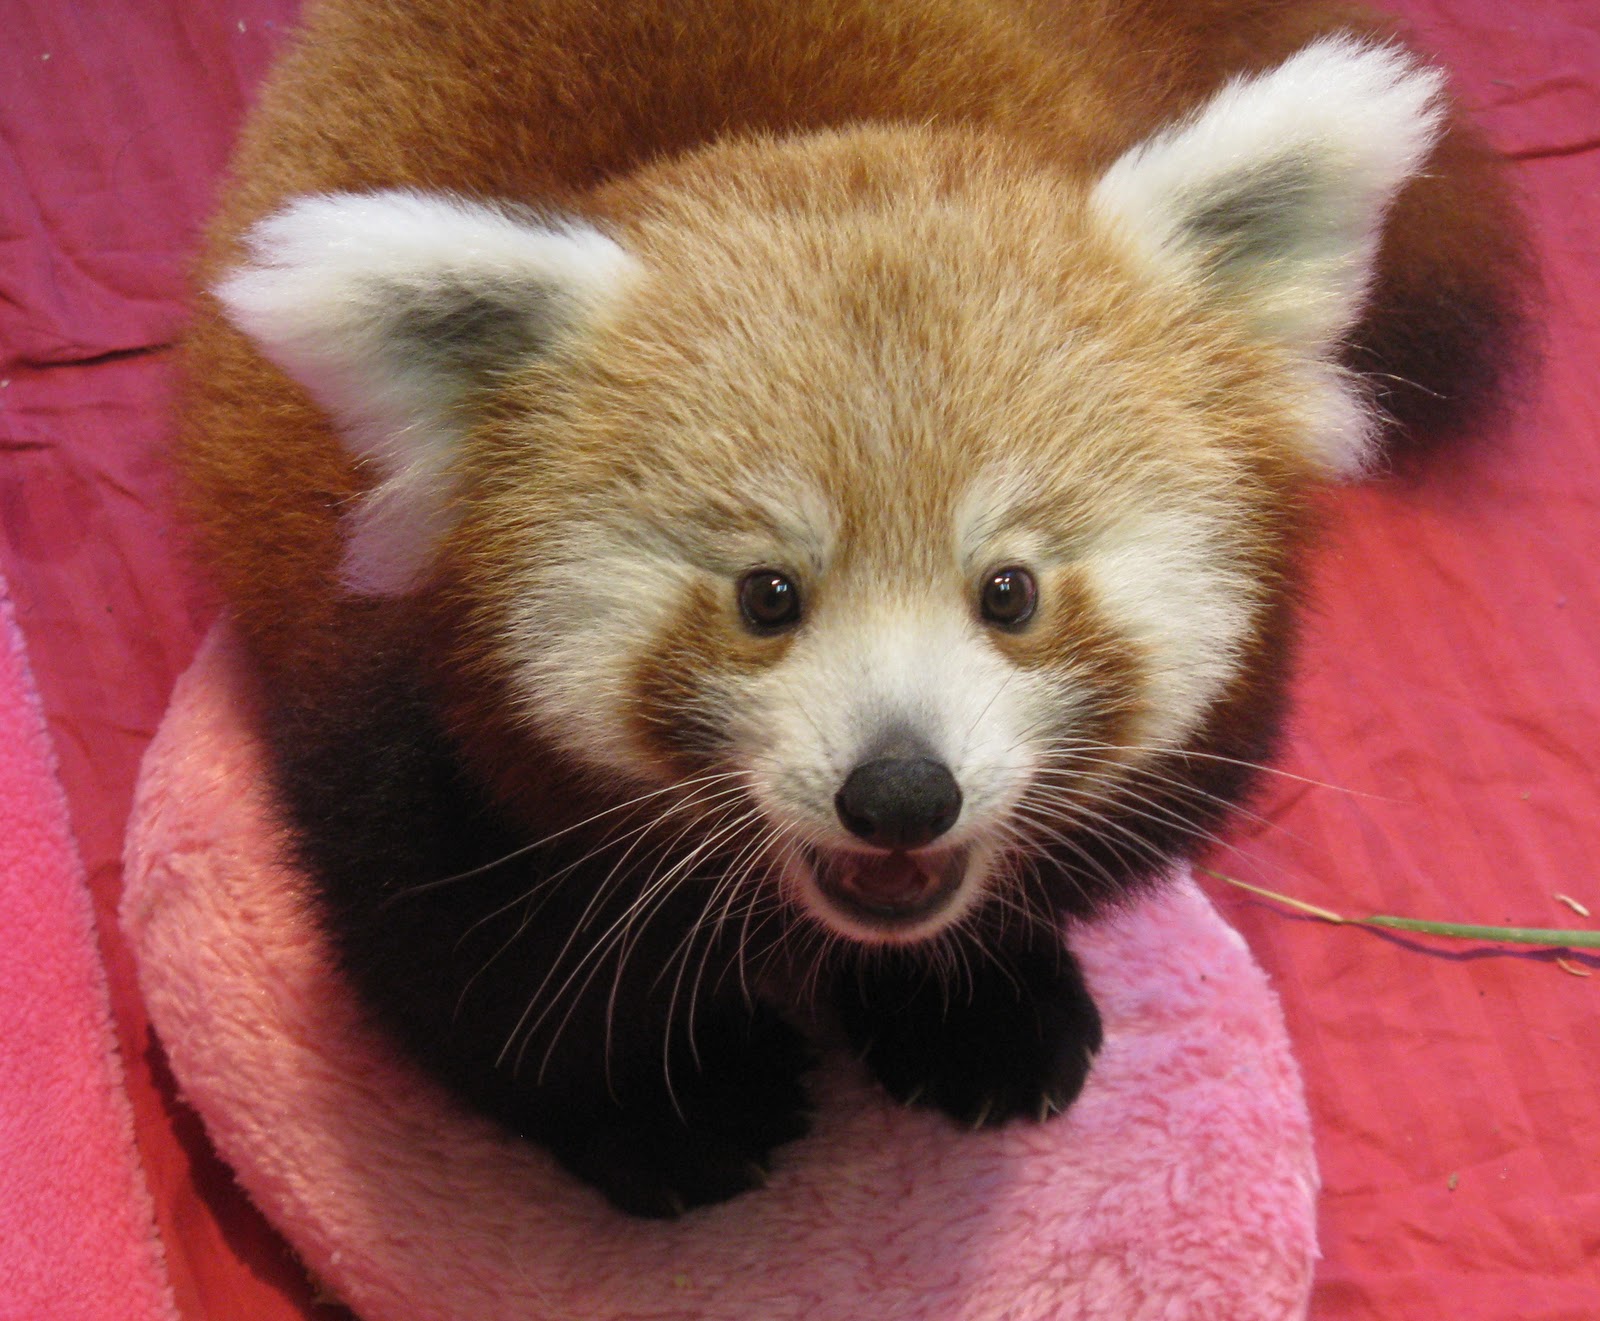 knoxville-zoo-red-panda.jpg